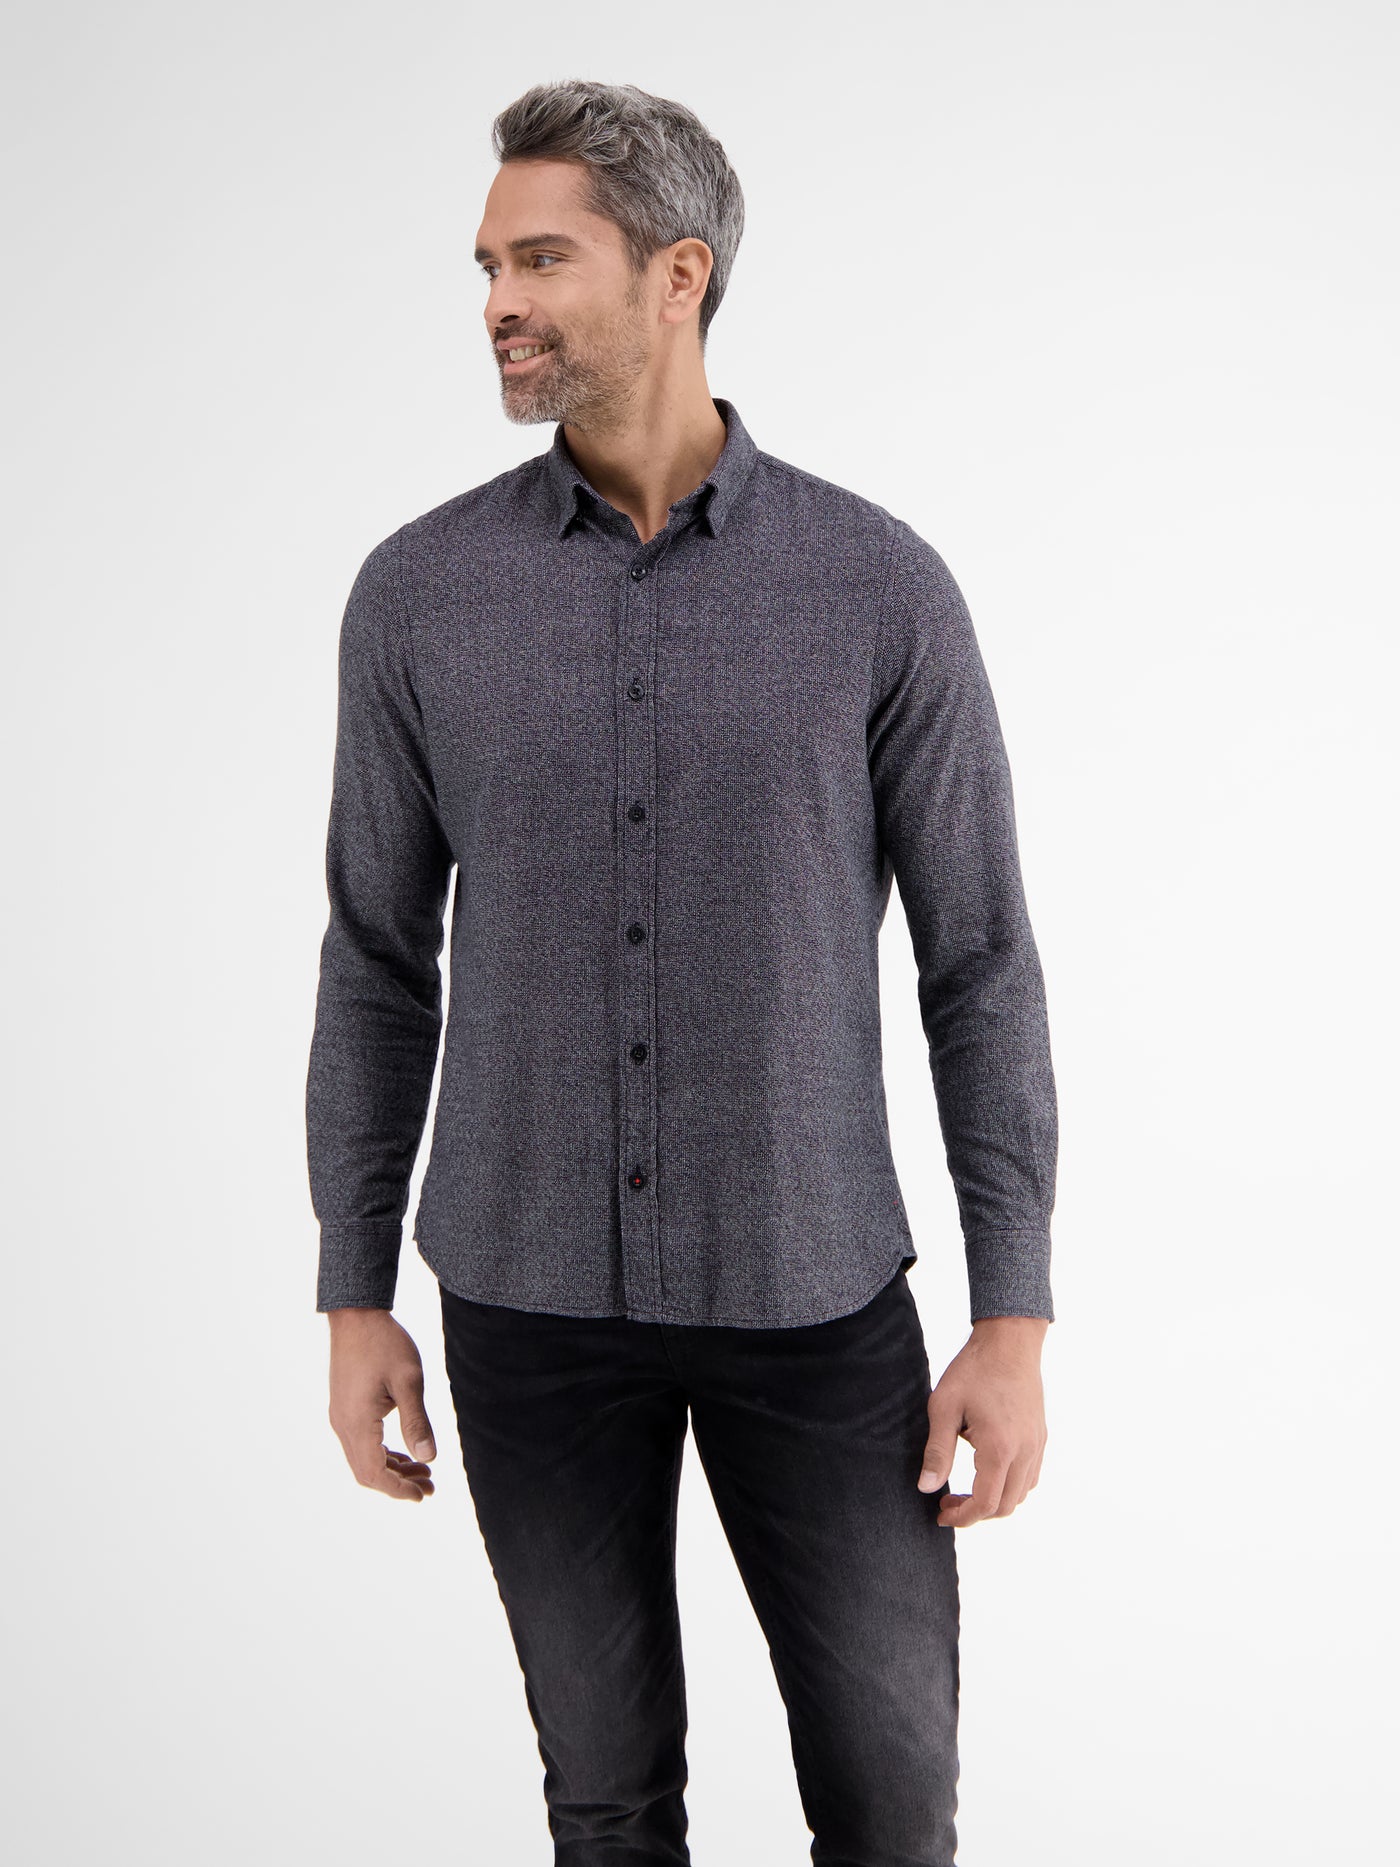 LRS LERROS – look shirt SHOP in long-sleeved melange